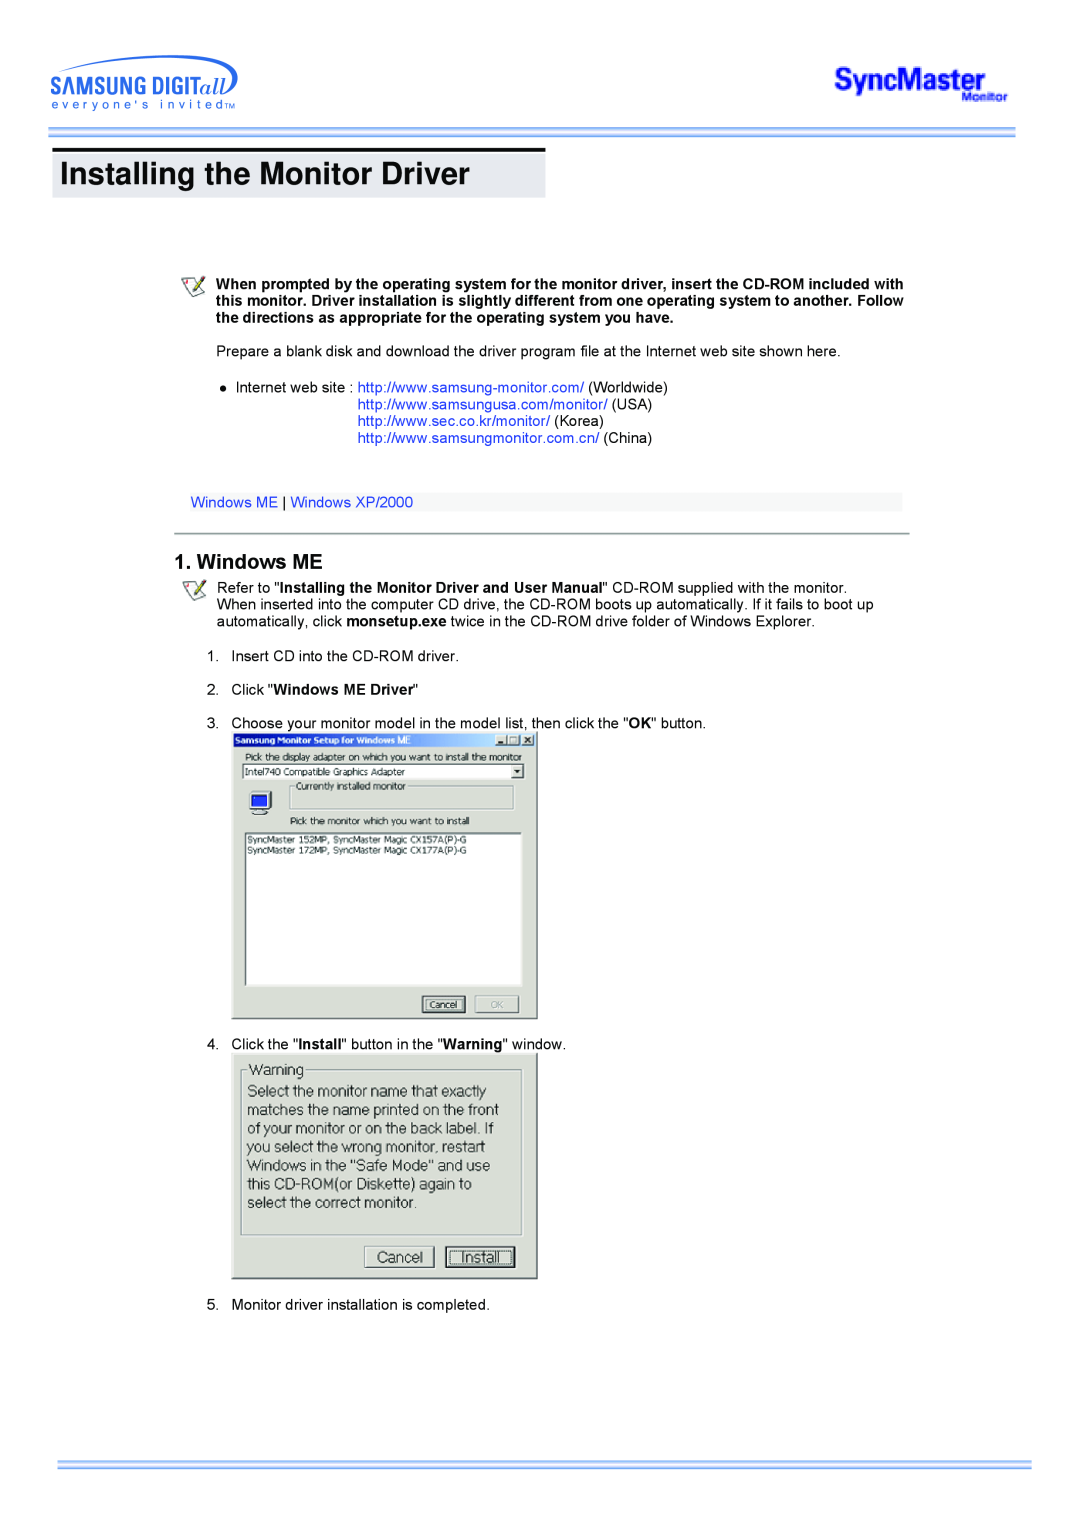 Samsung 173MP manual Installing the Monitor Driver, Windows ME Windows XP/2000 